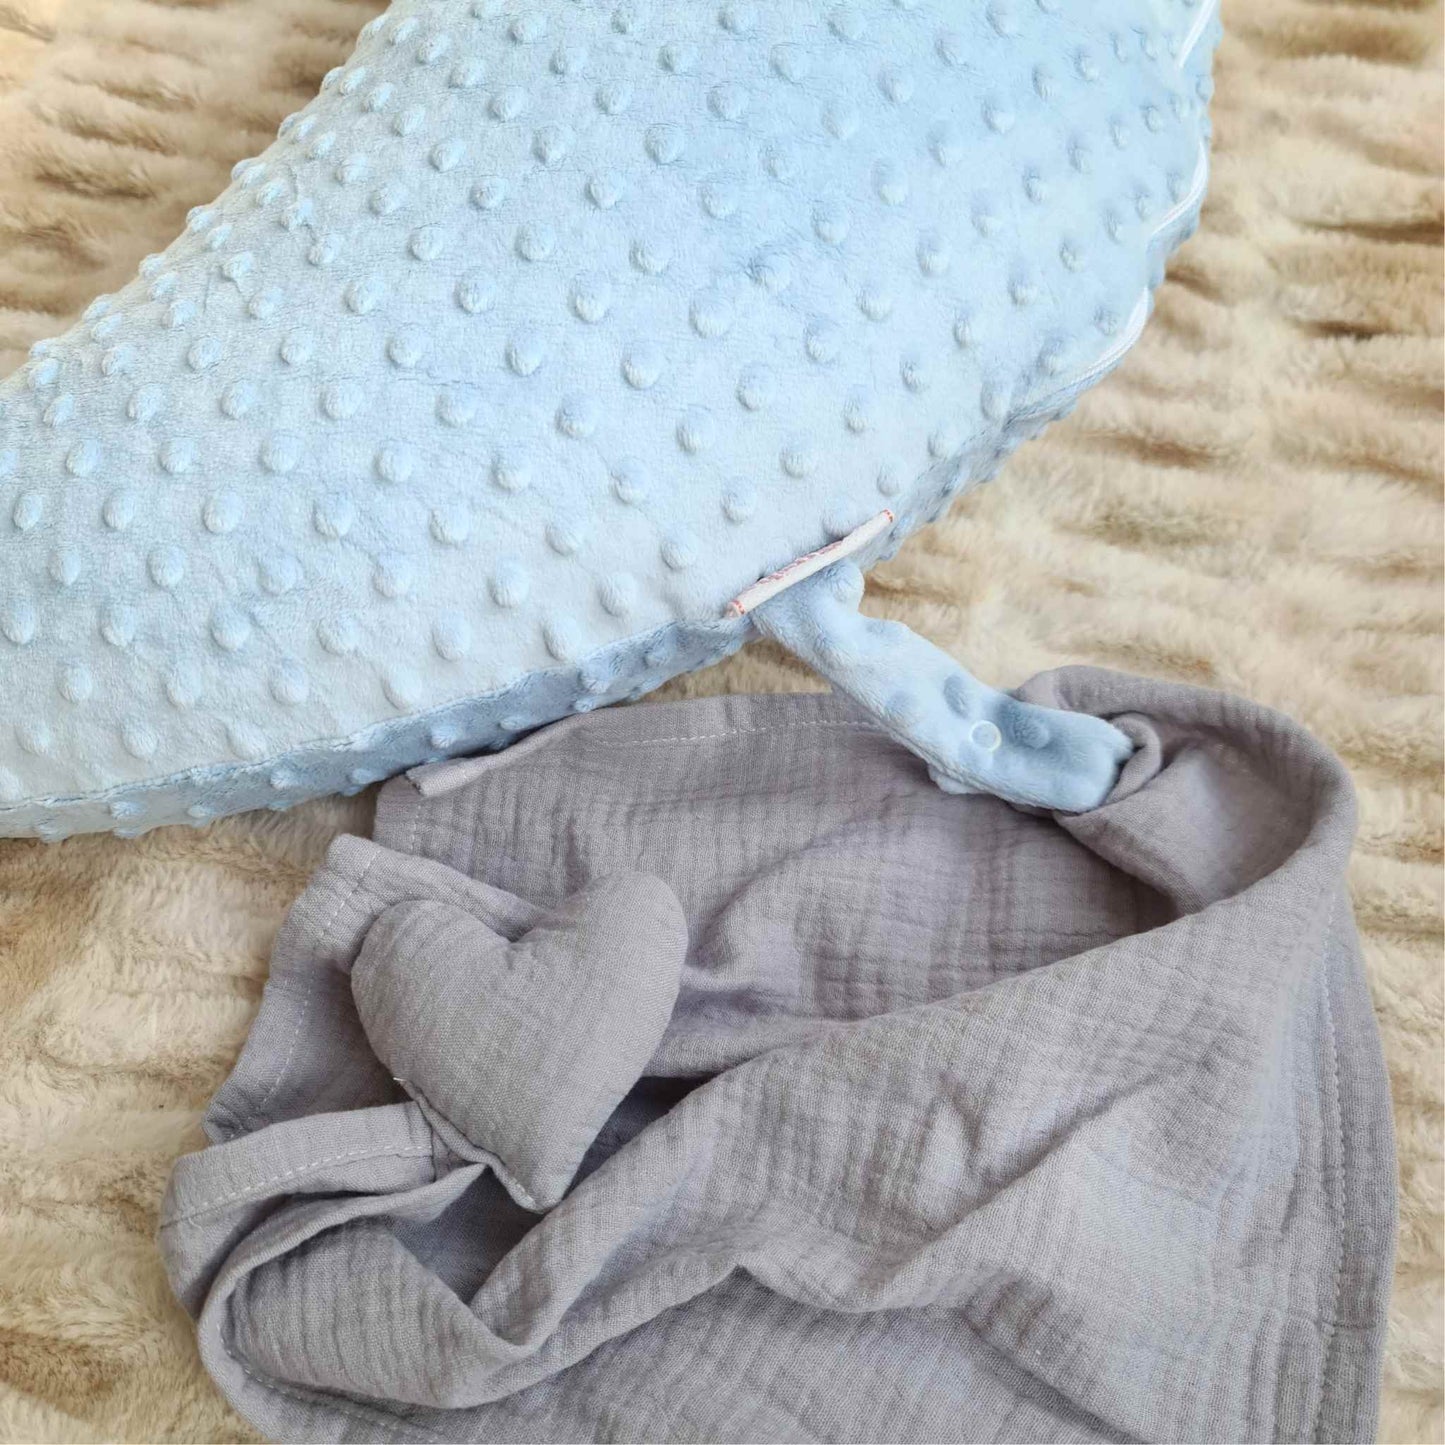 evcushy baby pillow nursing pillow with cover plush blue evcushy